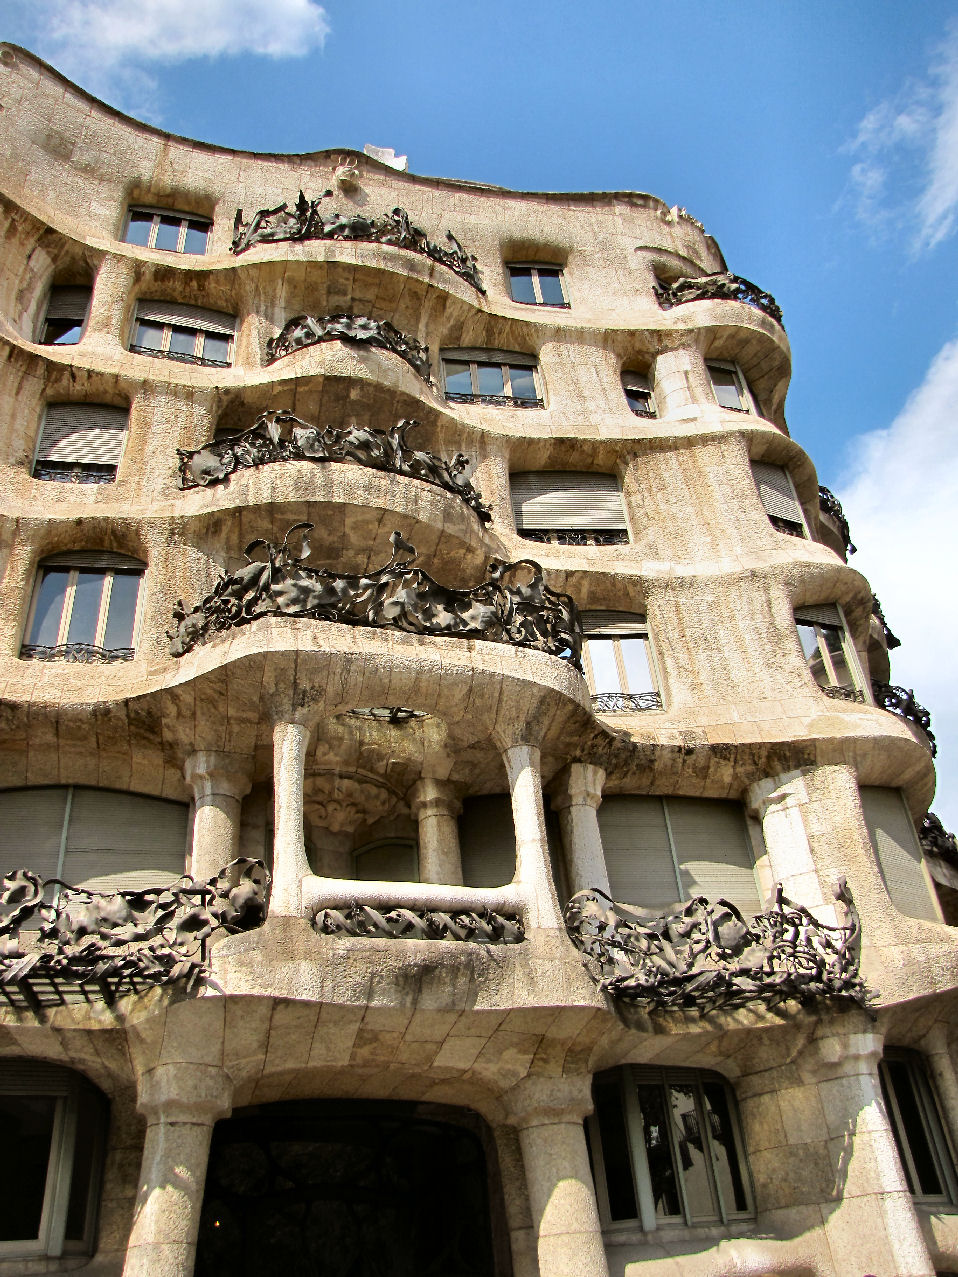 Femme au foyer: A Gaudí day